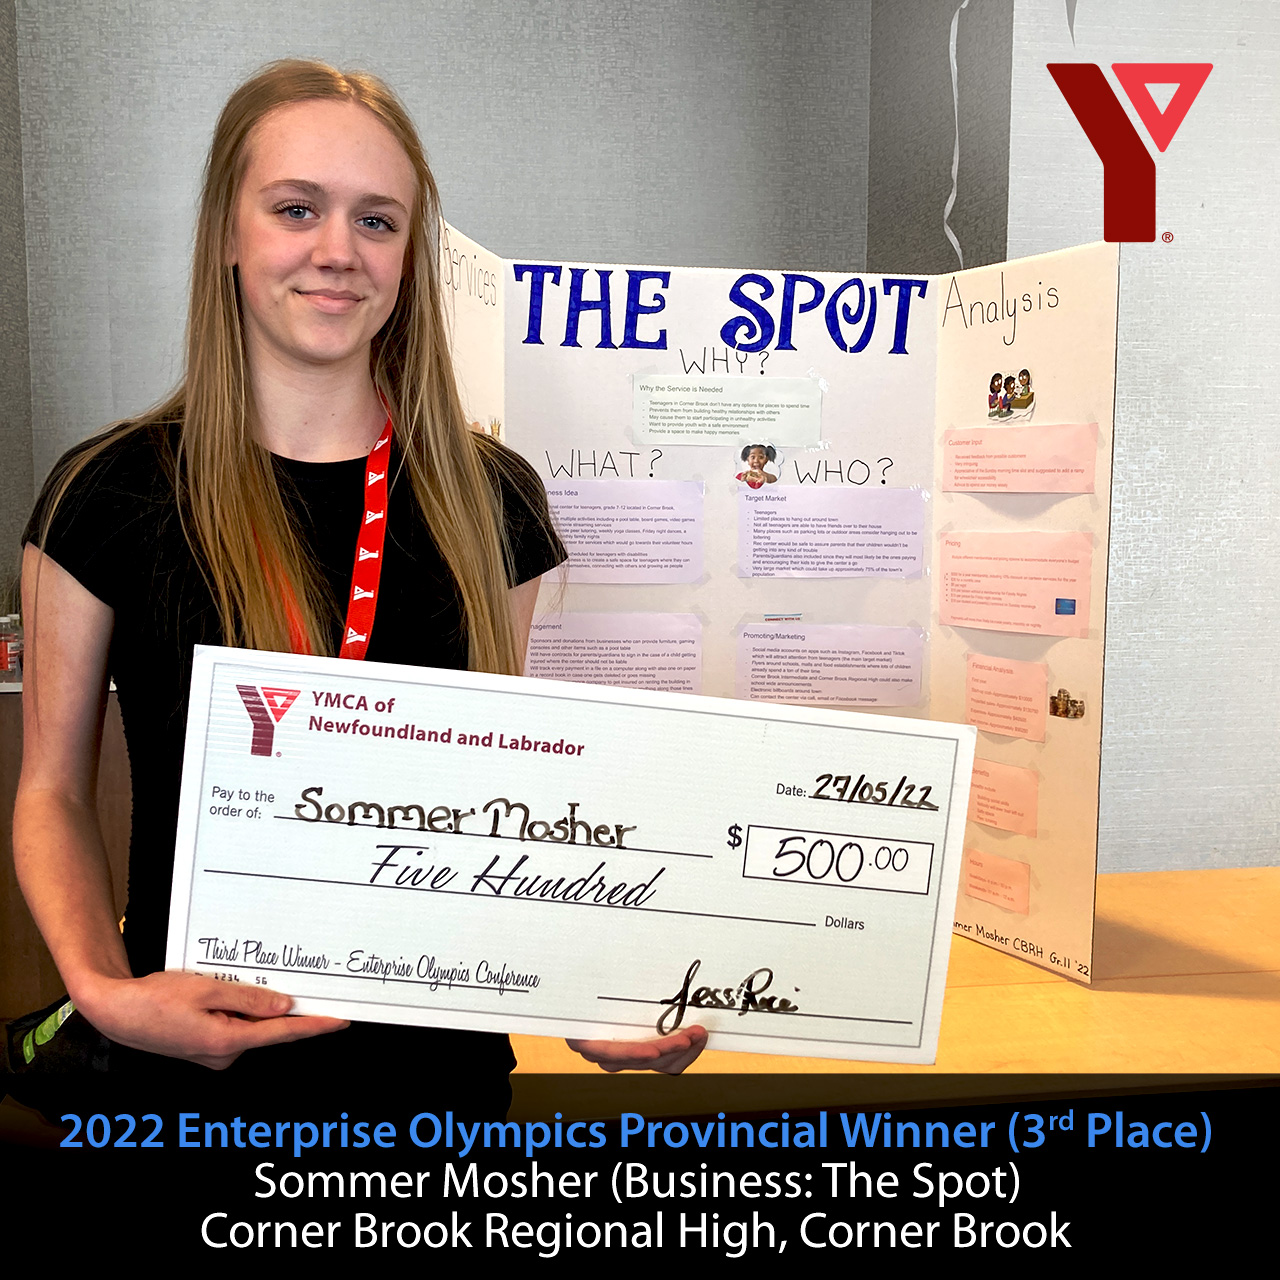 3rd Place - Sommer Mosher (Business: The Spot) from Corner Brook Regional High, Corner Brook